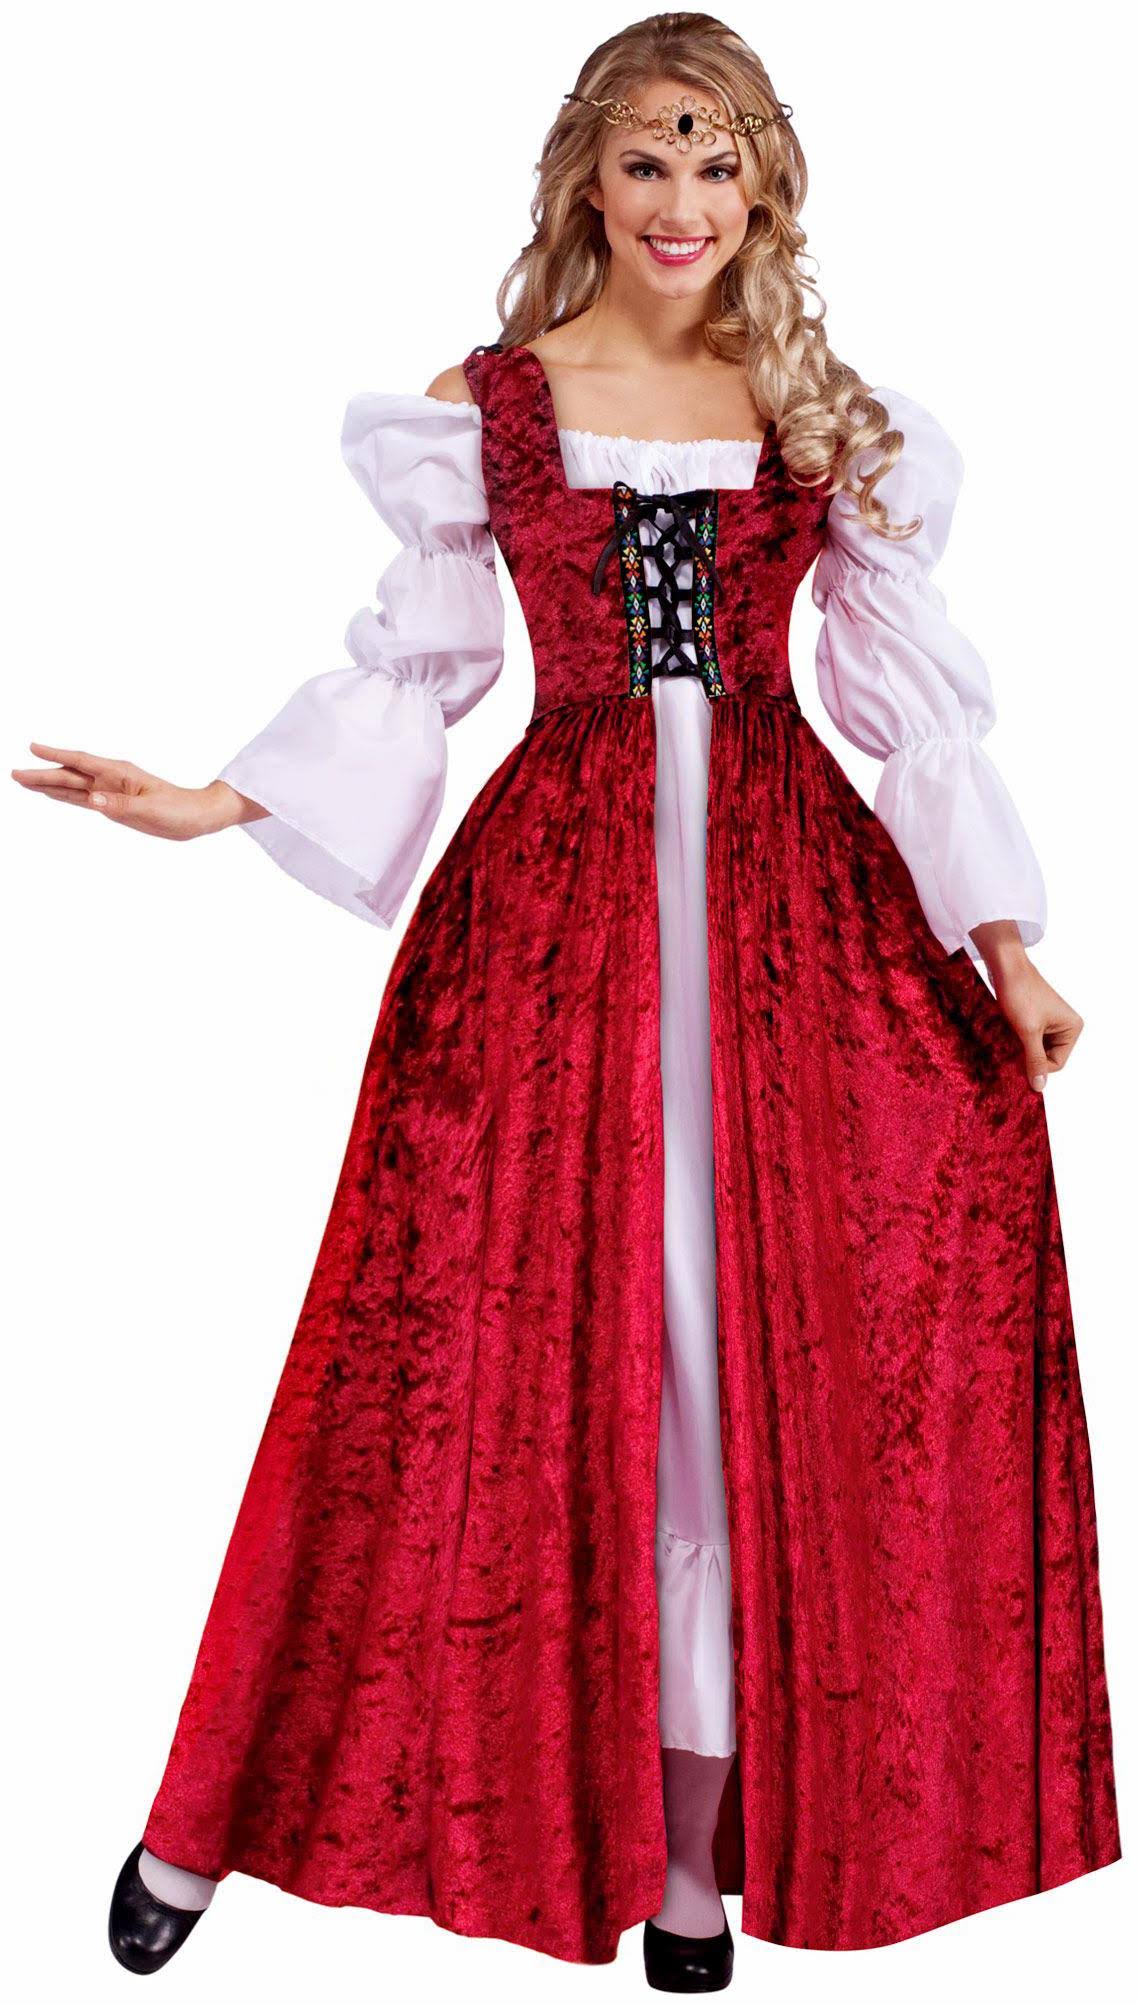 Medieval Lace-up Robe Renaissance Maiden Wench Costume Halloween Fancy Dress Women's STD Forum Novelties MULTI